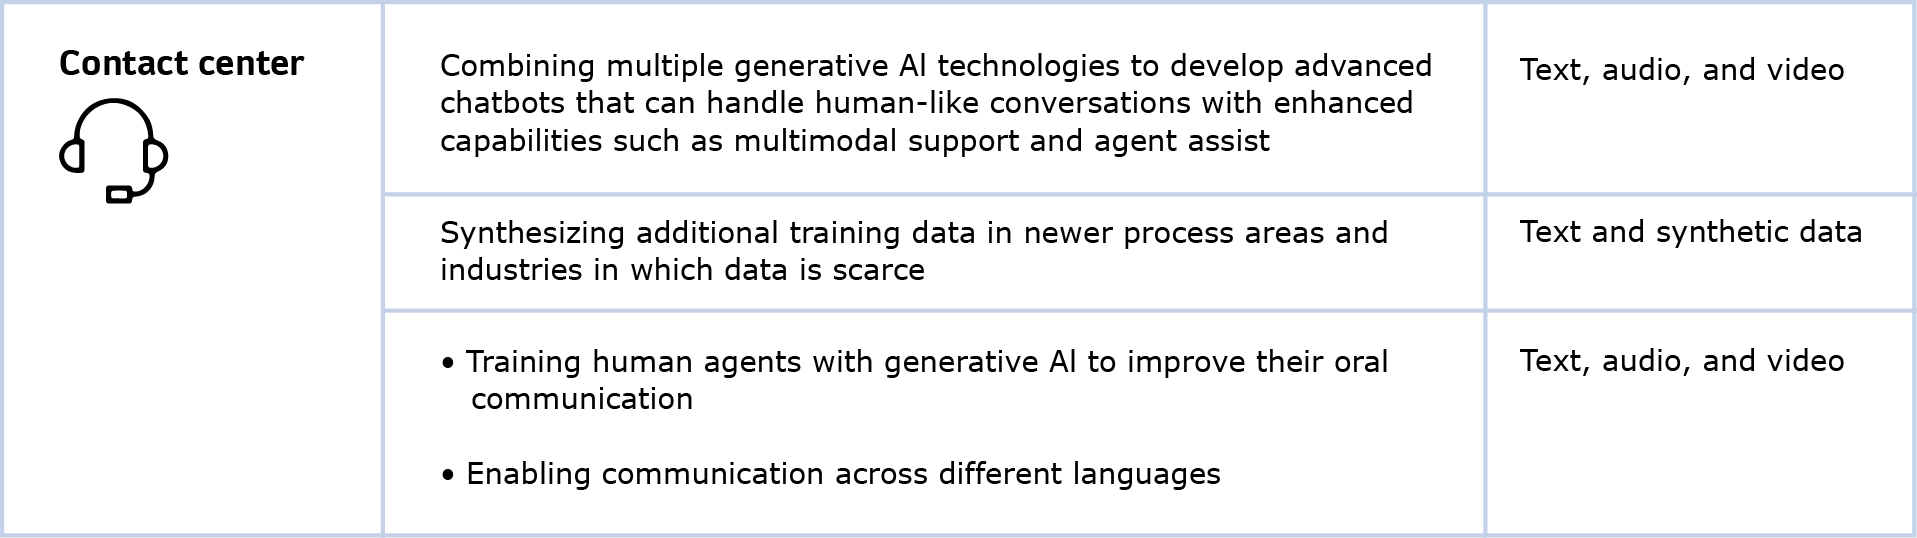 Generative AI - Contact center 